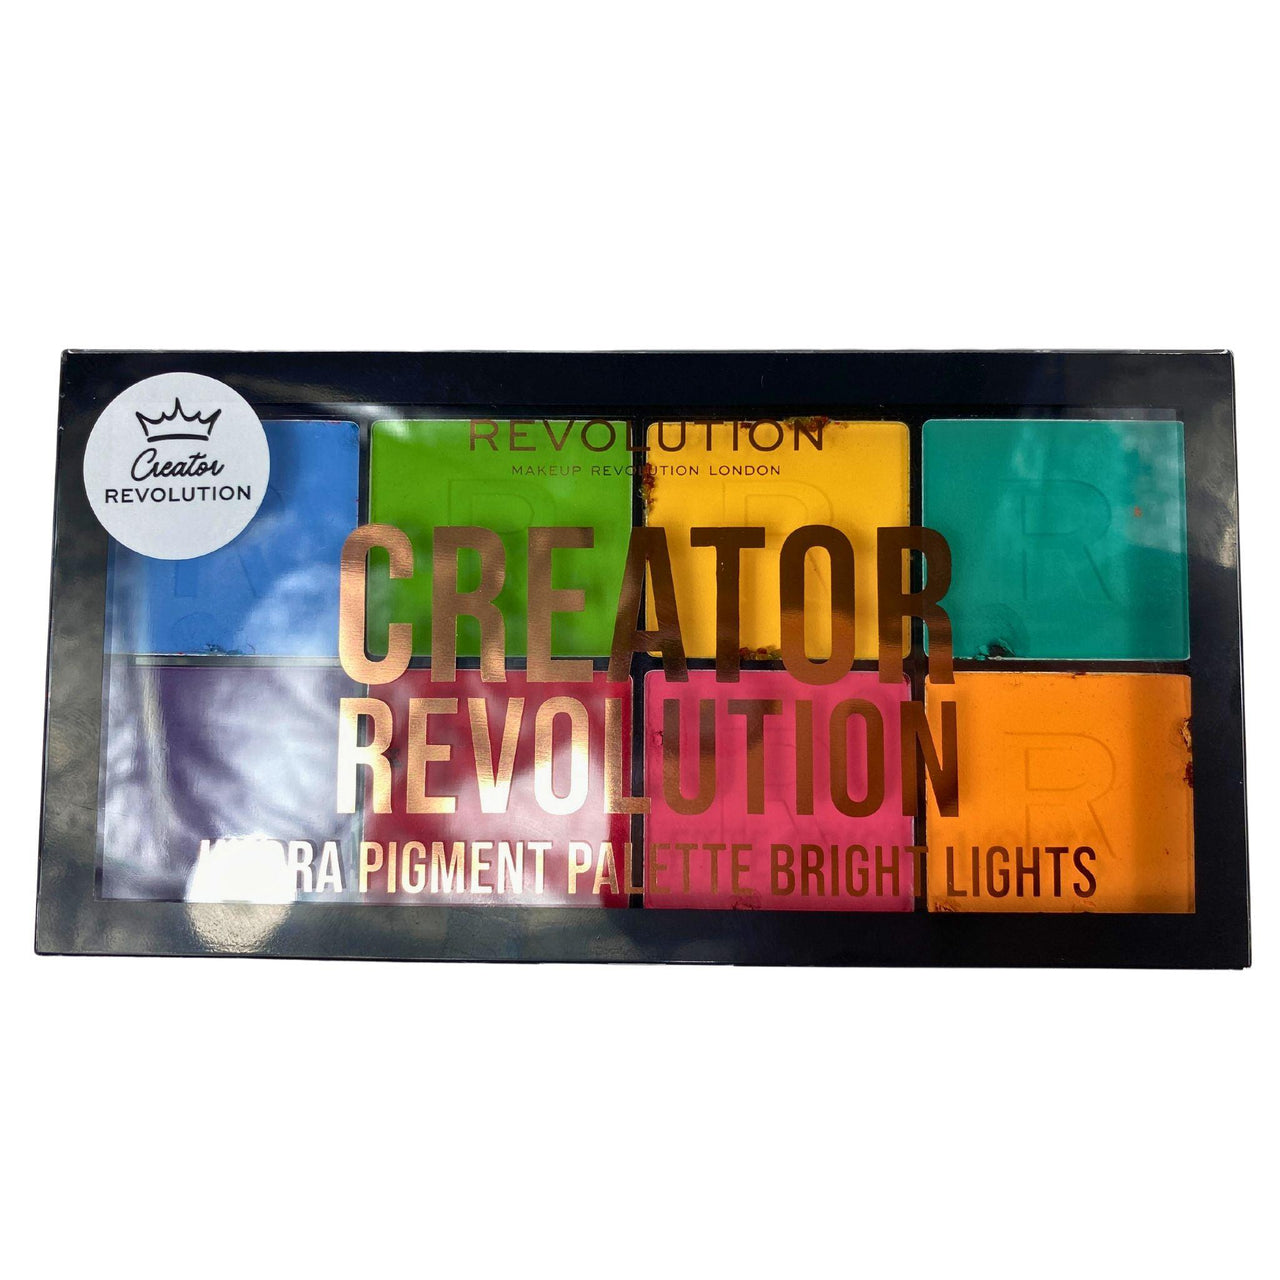 Revolution Creator Revolution Hydra Pigment Palette Bright Lights (30 Pcs Lot) - Discount Wholesalers Inc